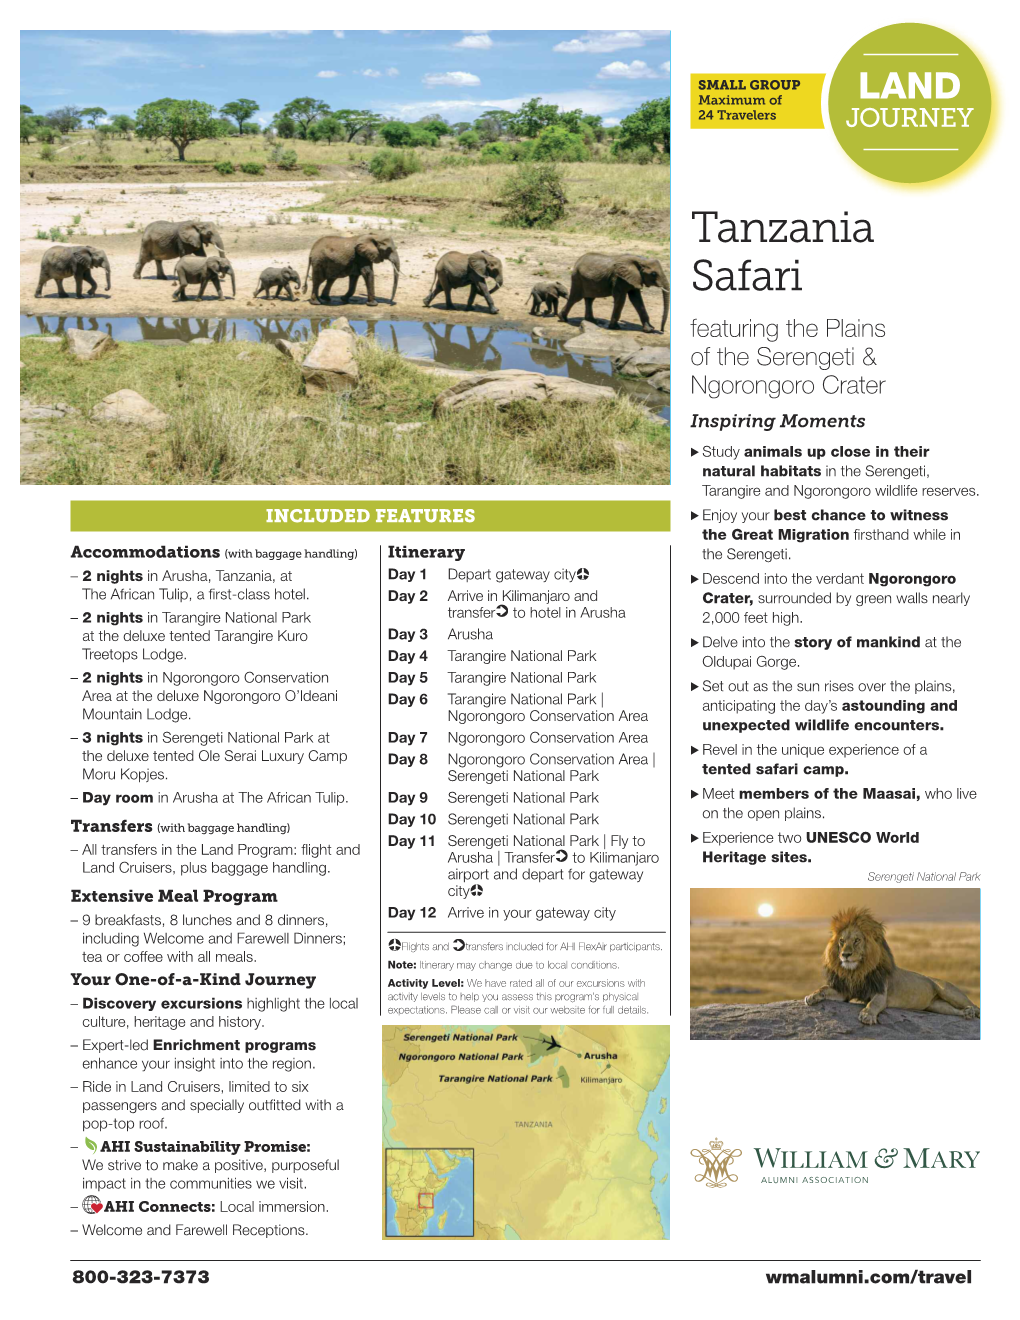 Tanzania Safari Featuring the Plains of the Serengeti & Ngorongoro Crater